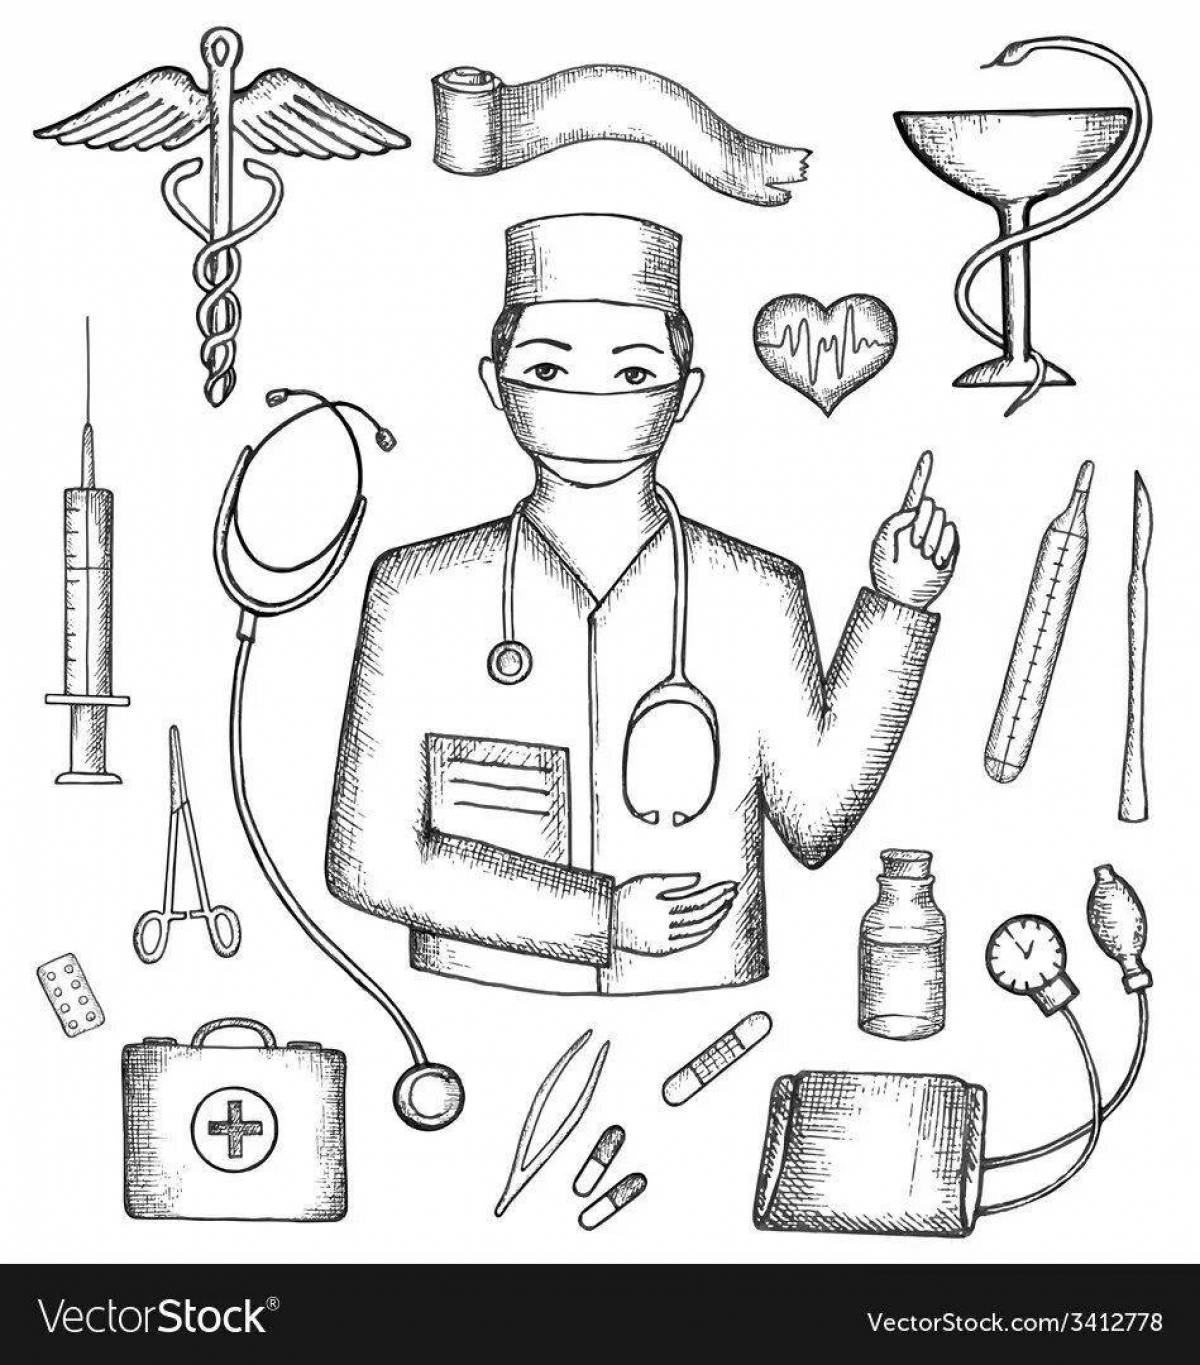 Рисунки на медицинскую тематику